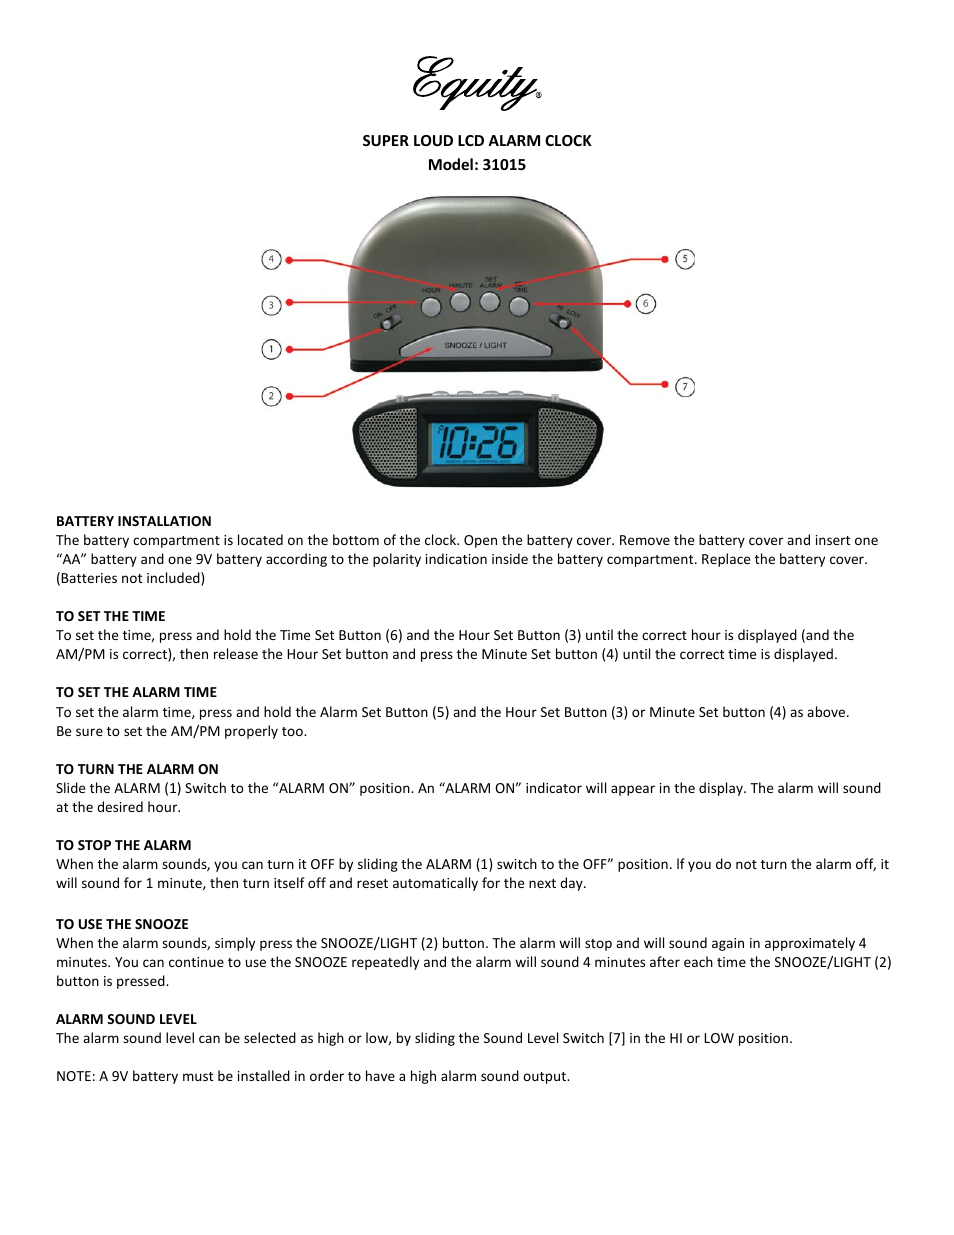 31015 Super-Loud Digital Alarm Clock